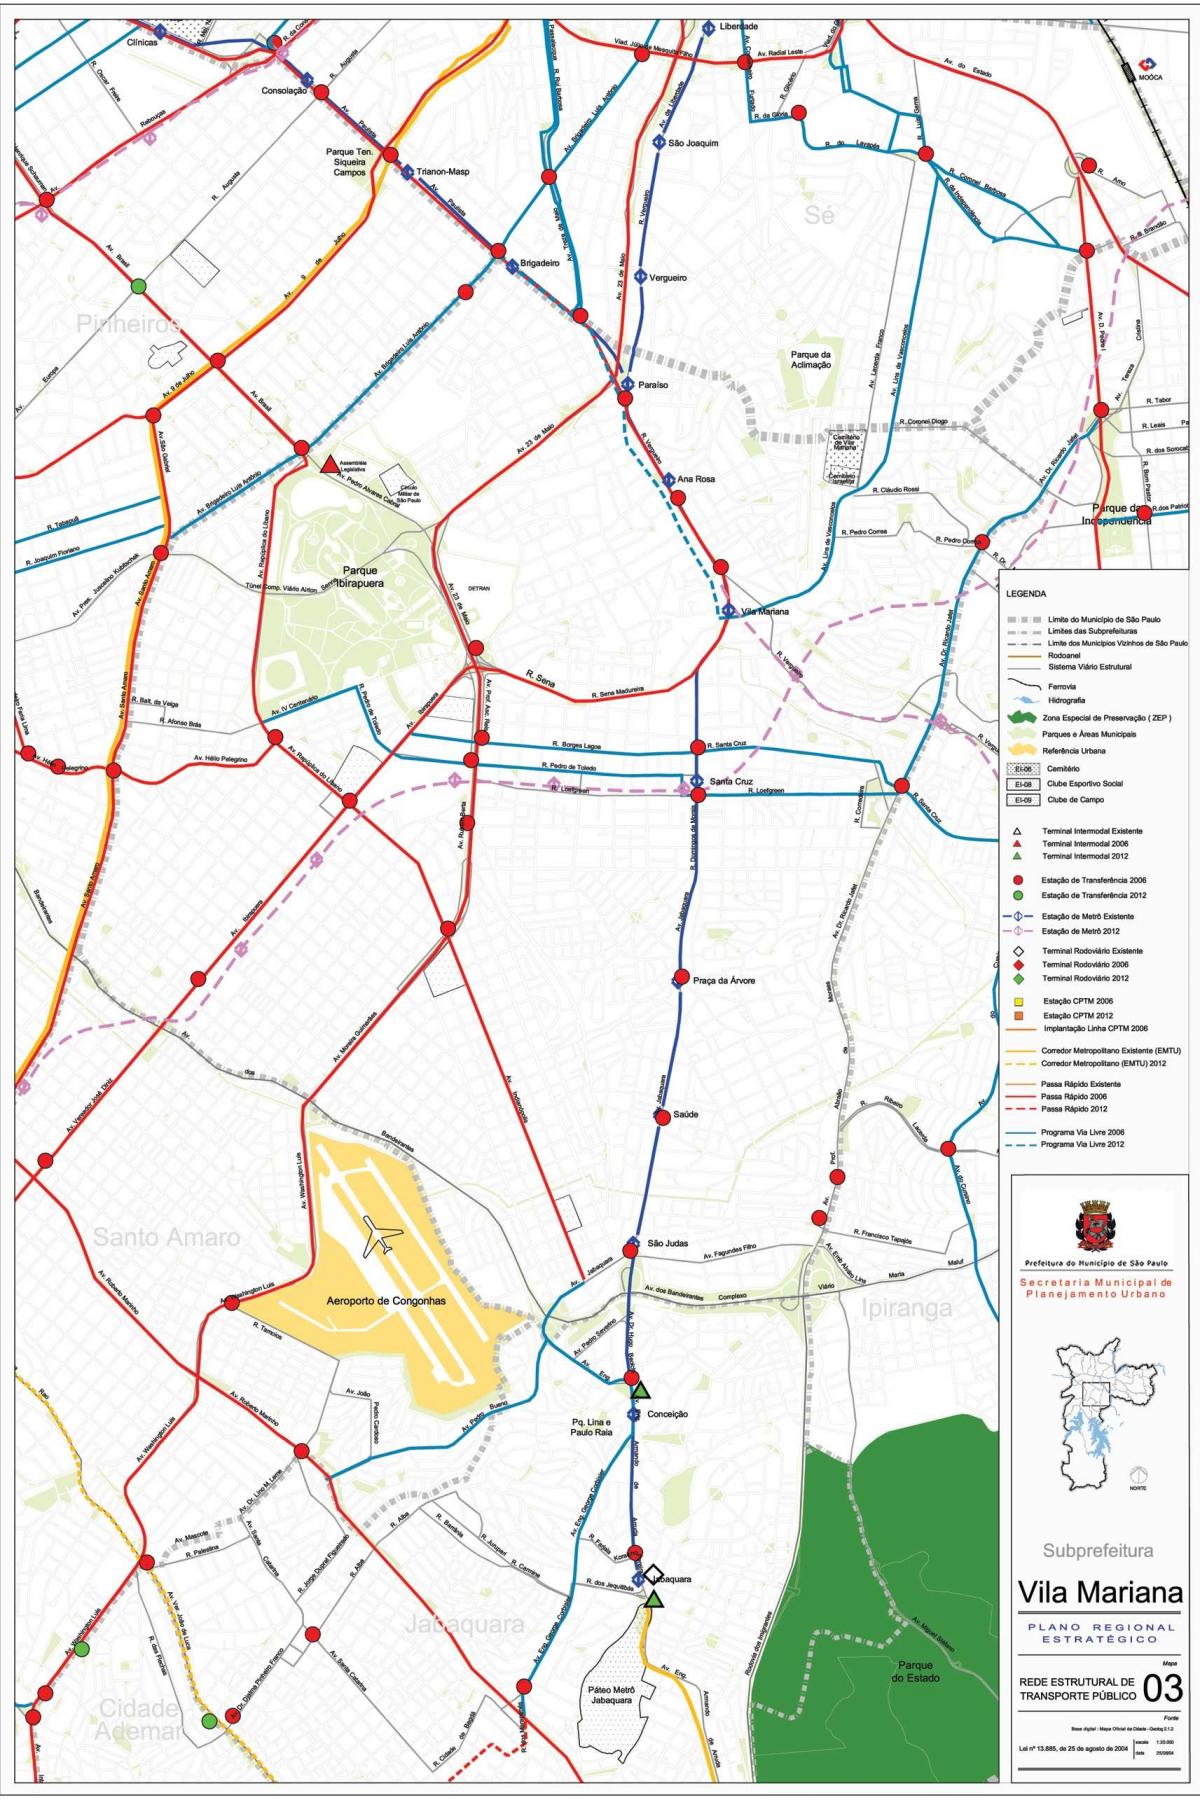 Mappa di Vila Mariana, São Paulo - trasporti Pubblici